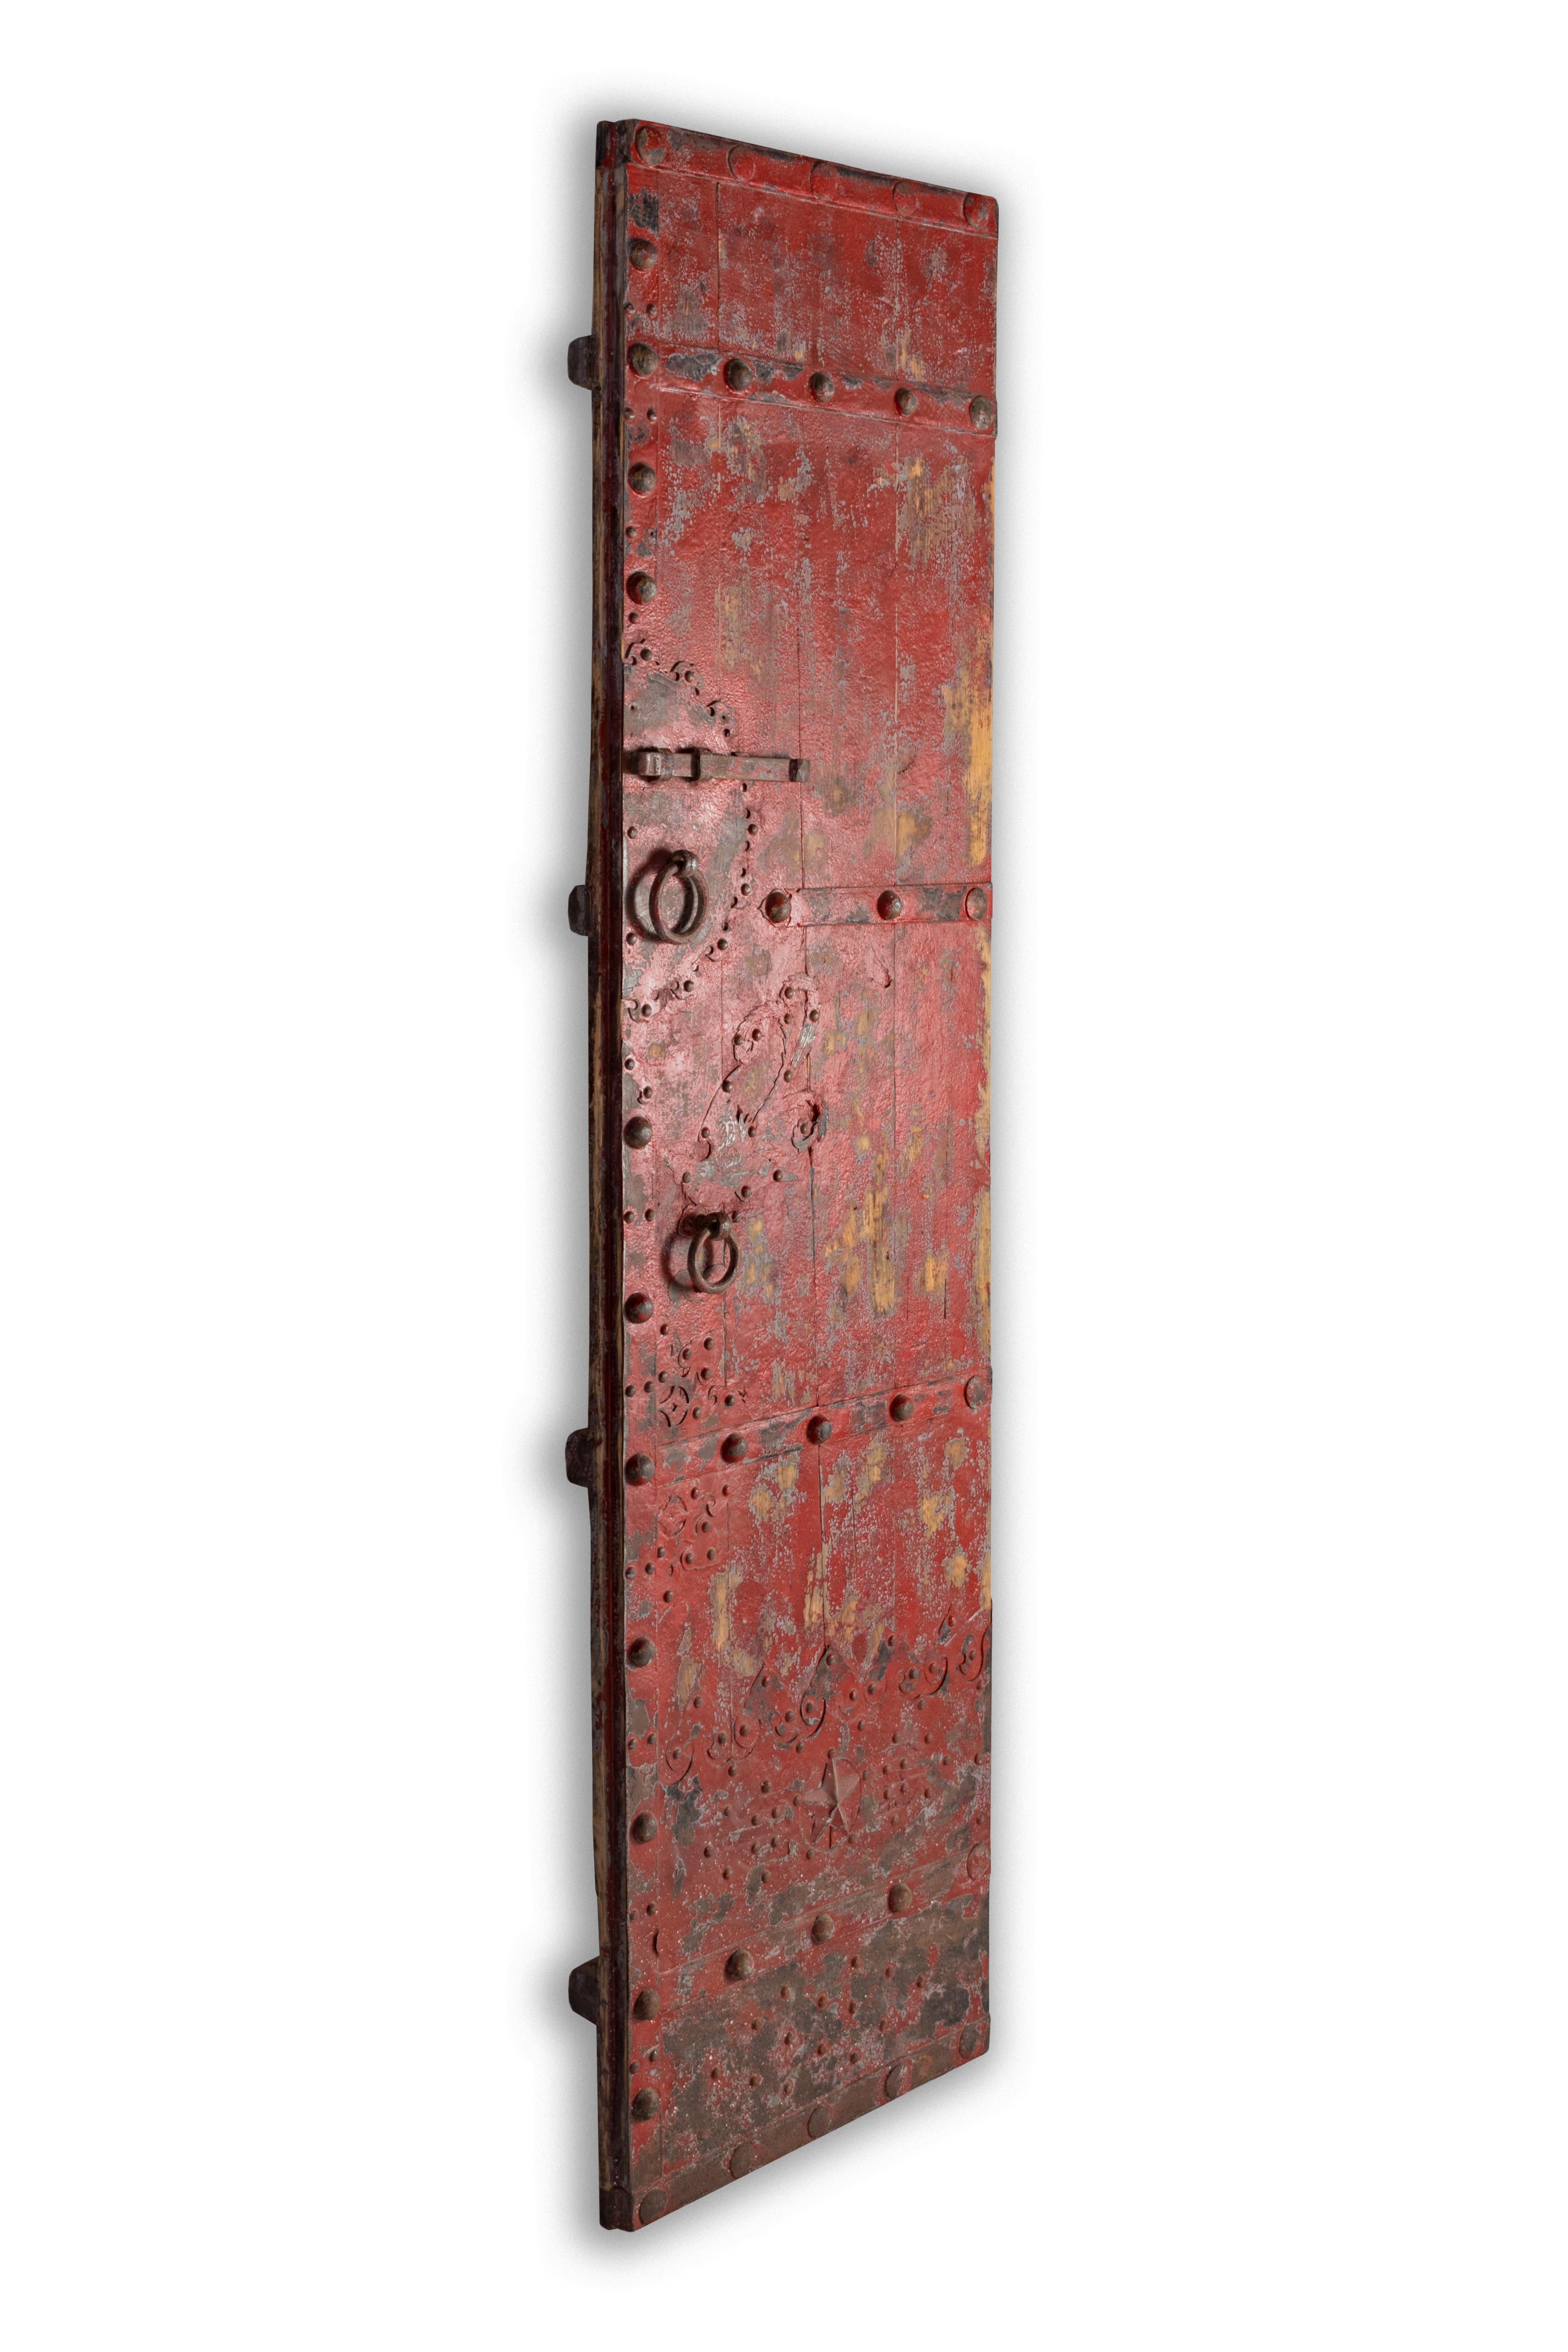 Rustic Pair of Red Patina South Asian Doors Repurposed as Wall Decor 